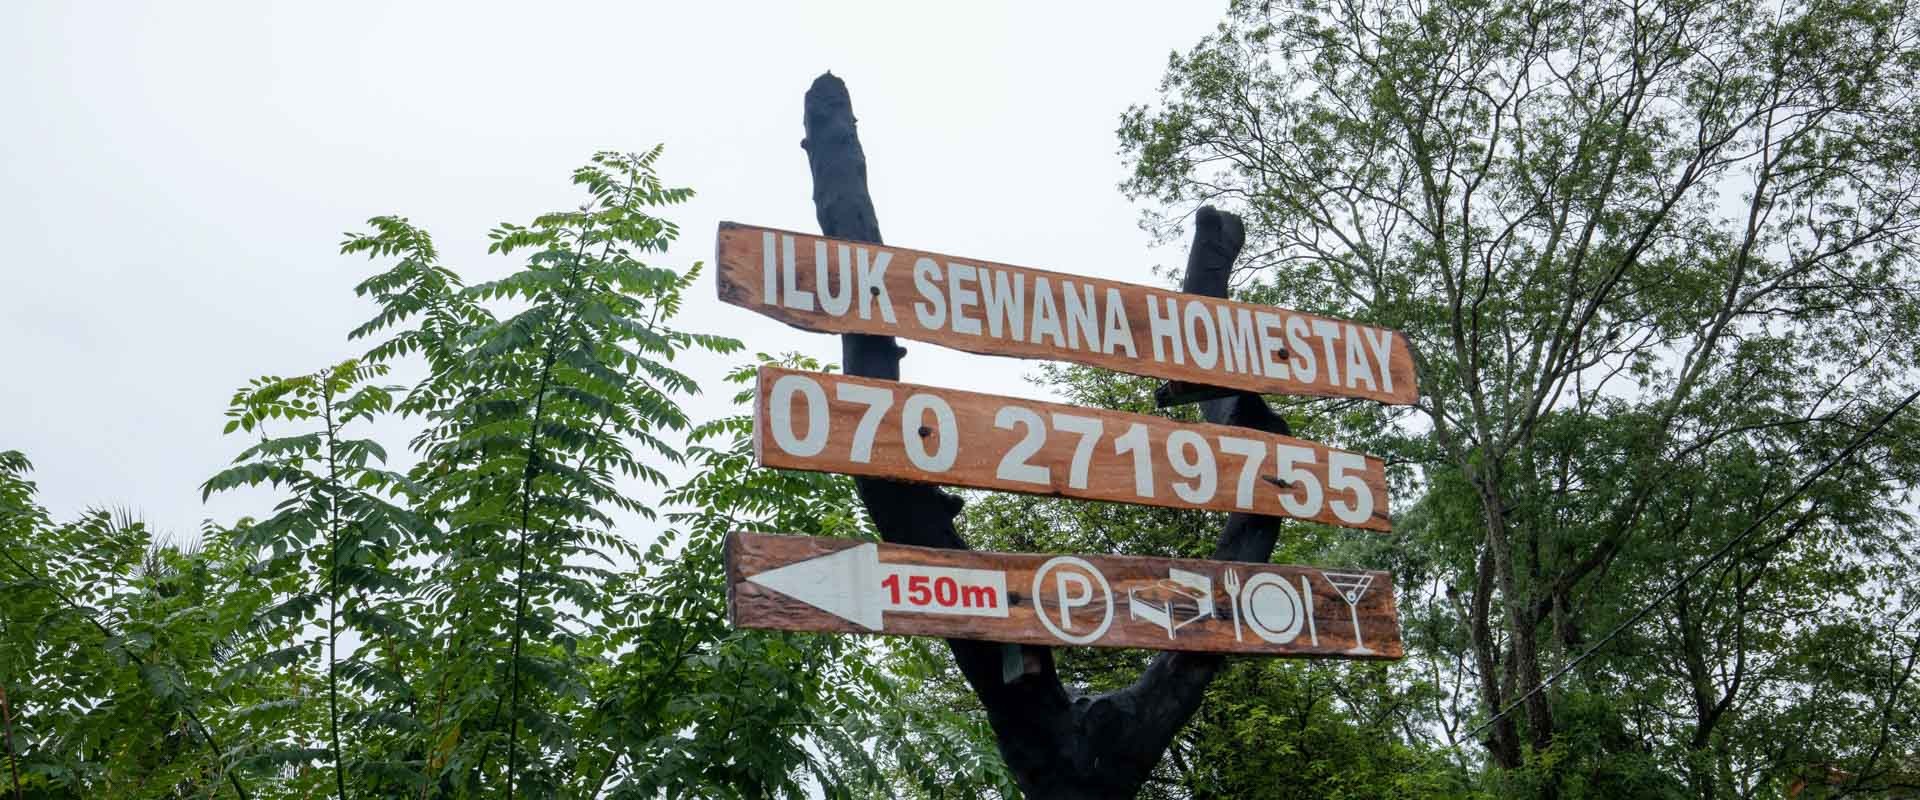 Iluksewana home stay - Gateway to East